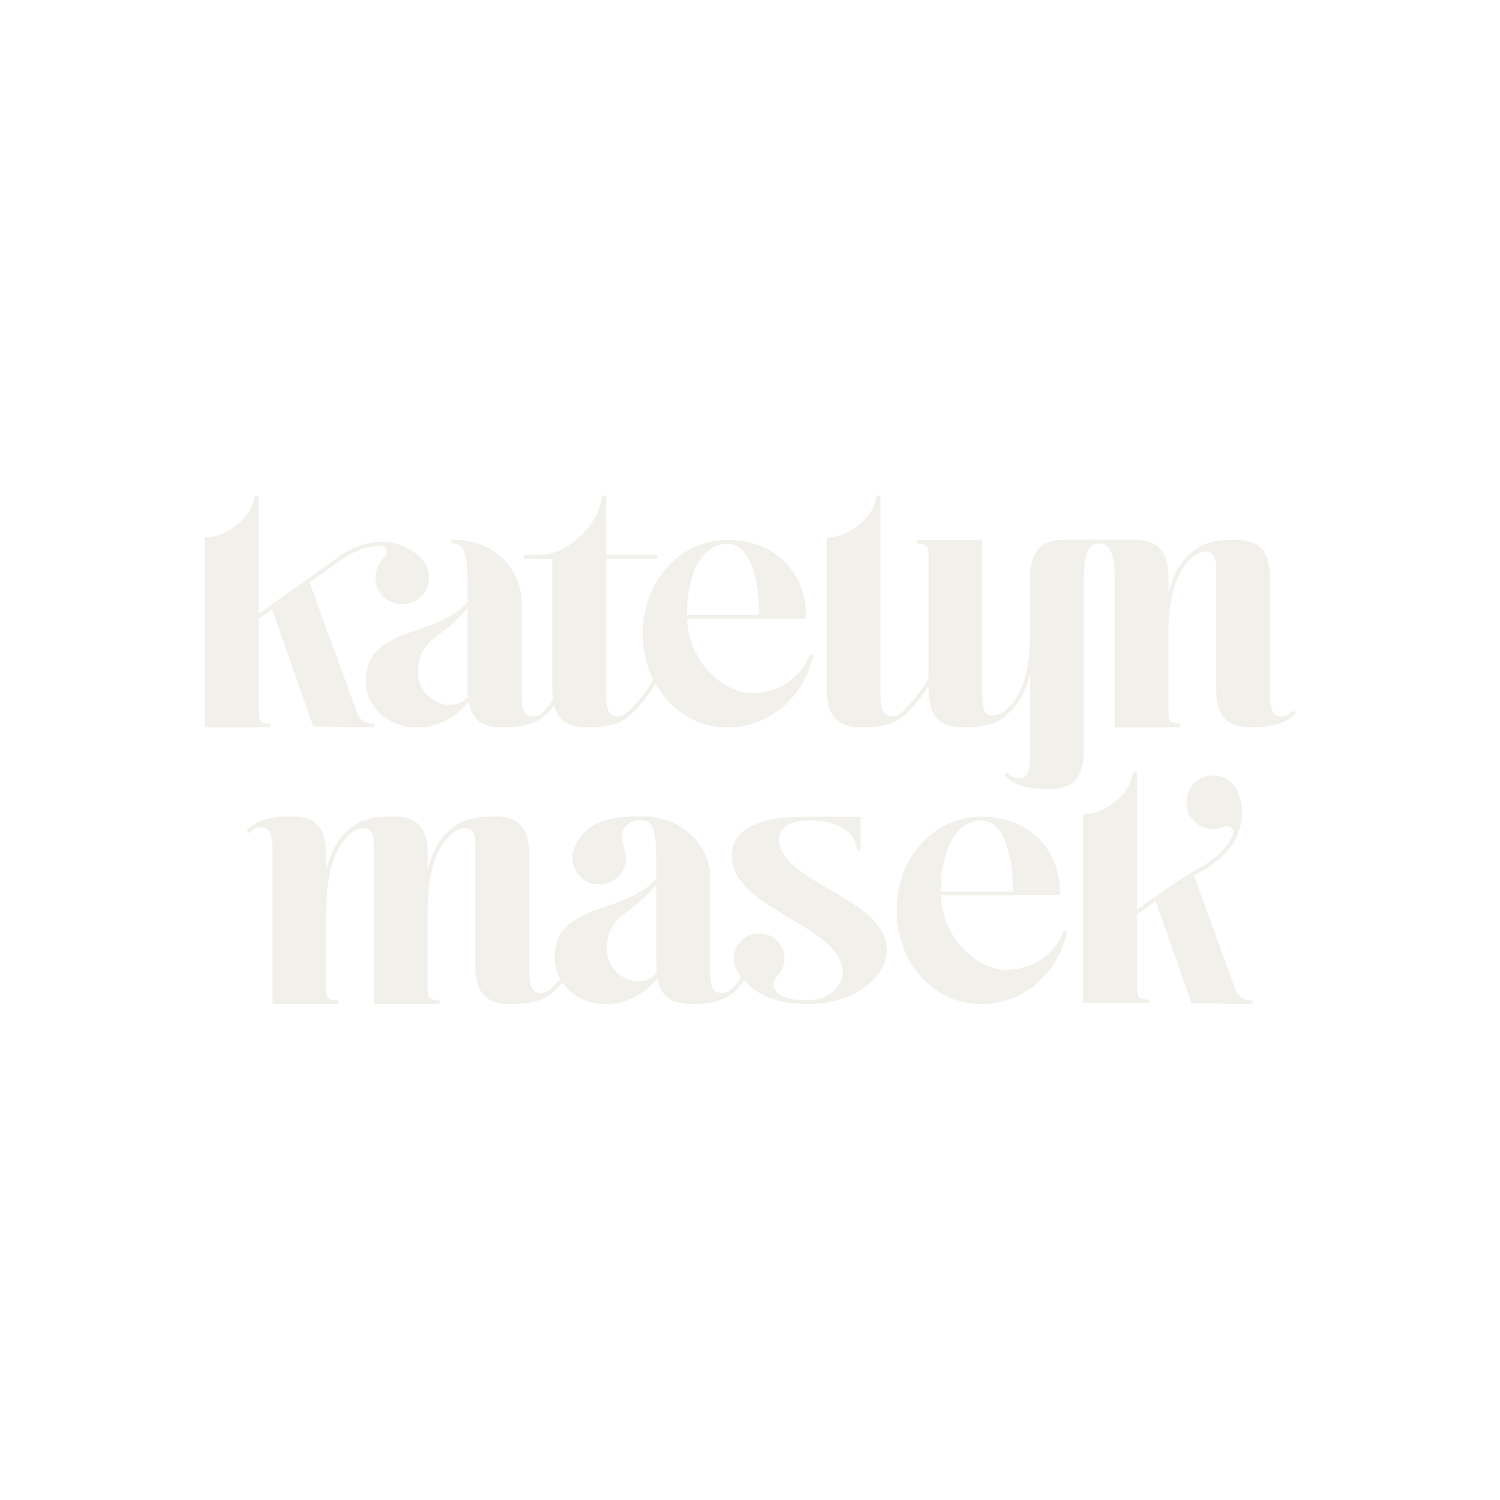 Katelyn Masek